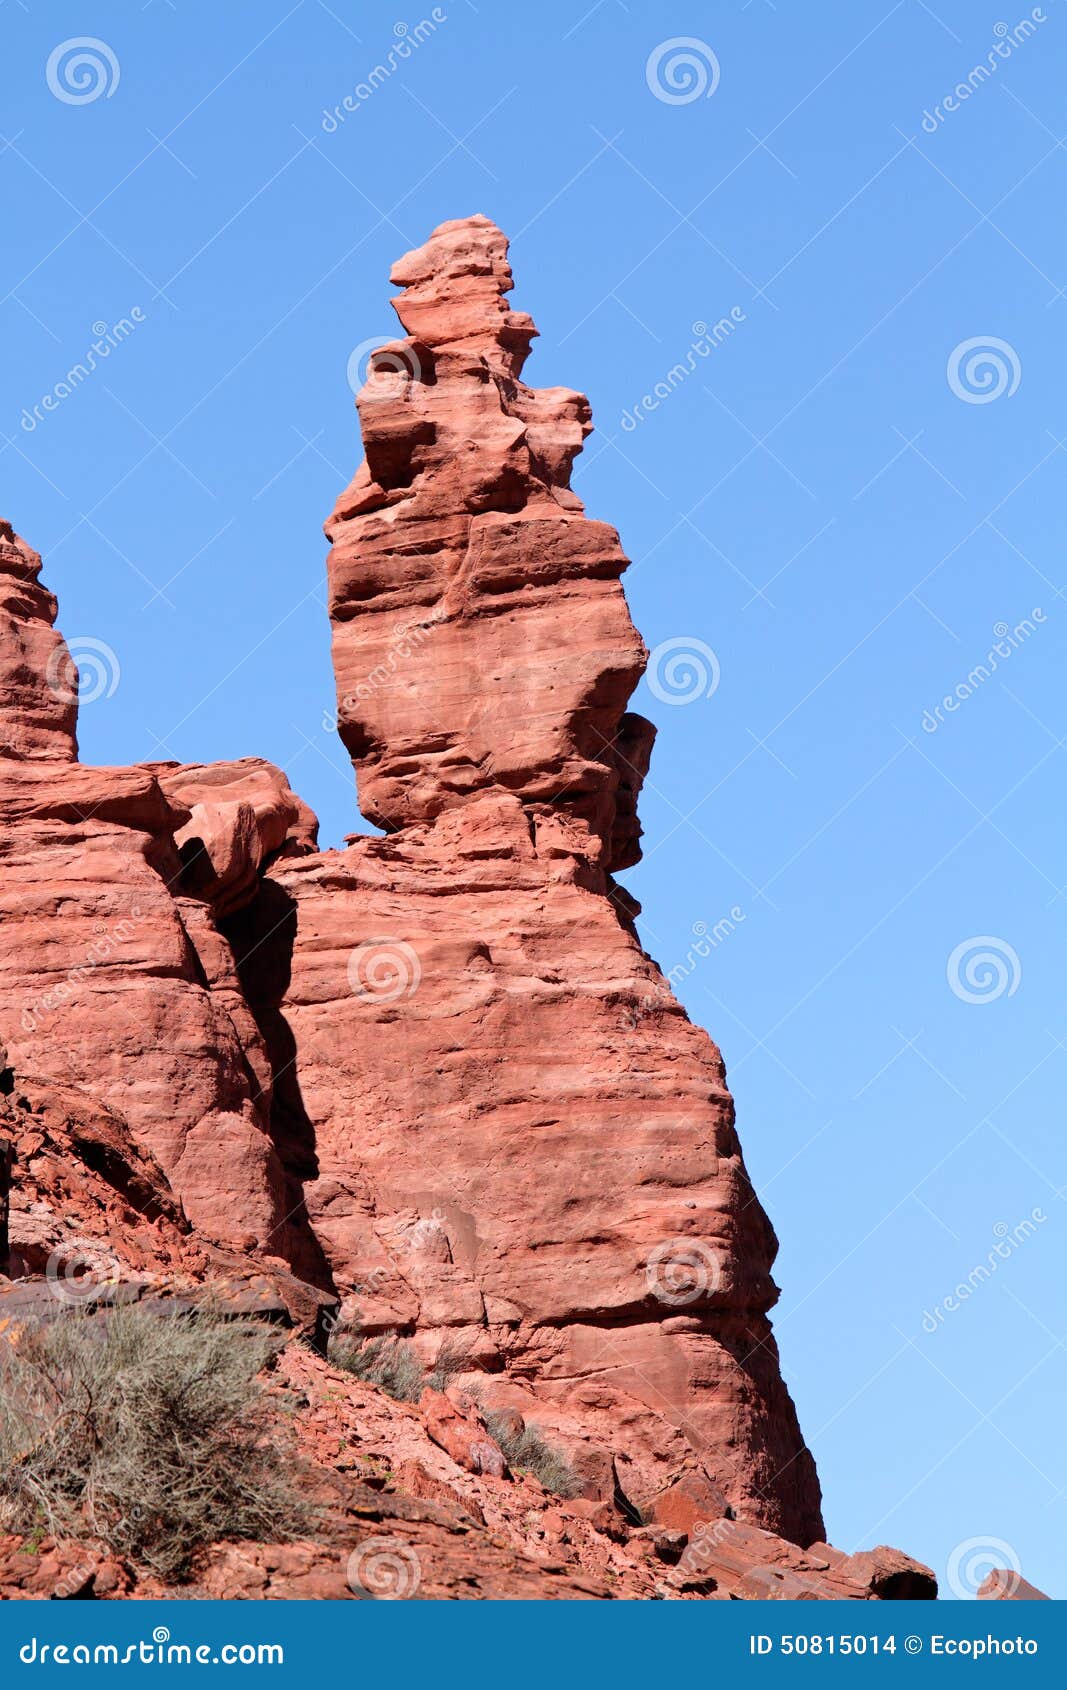 sandstone rock formation - talampaya